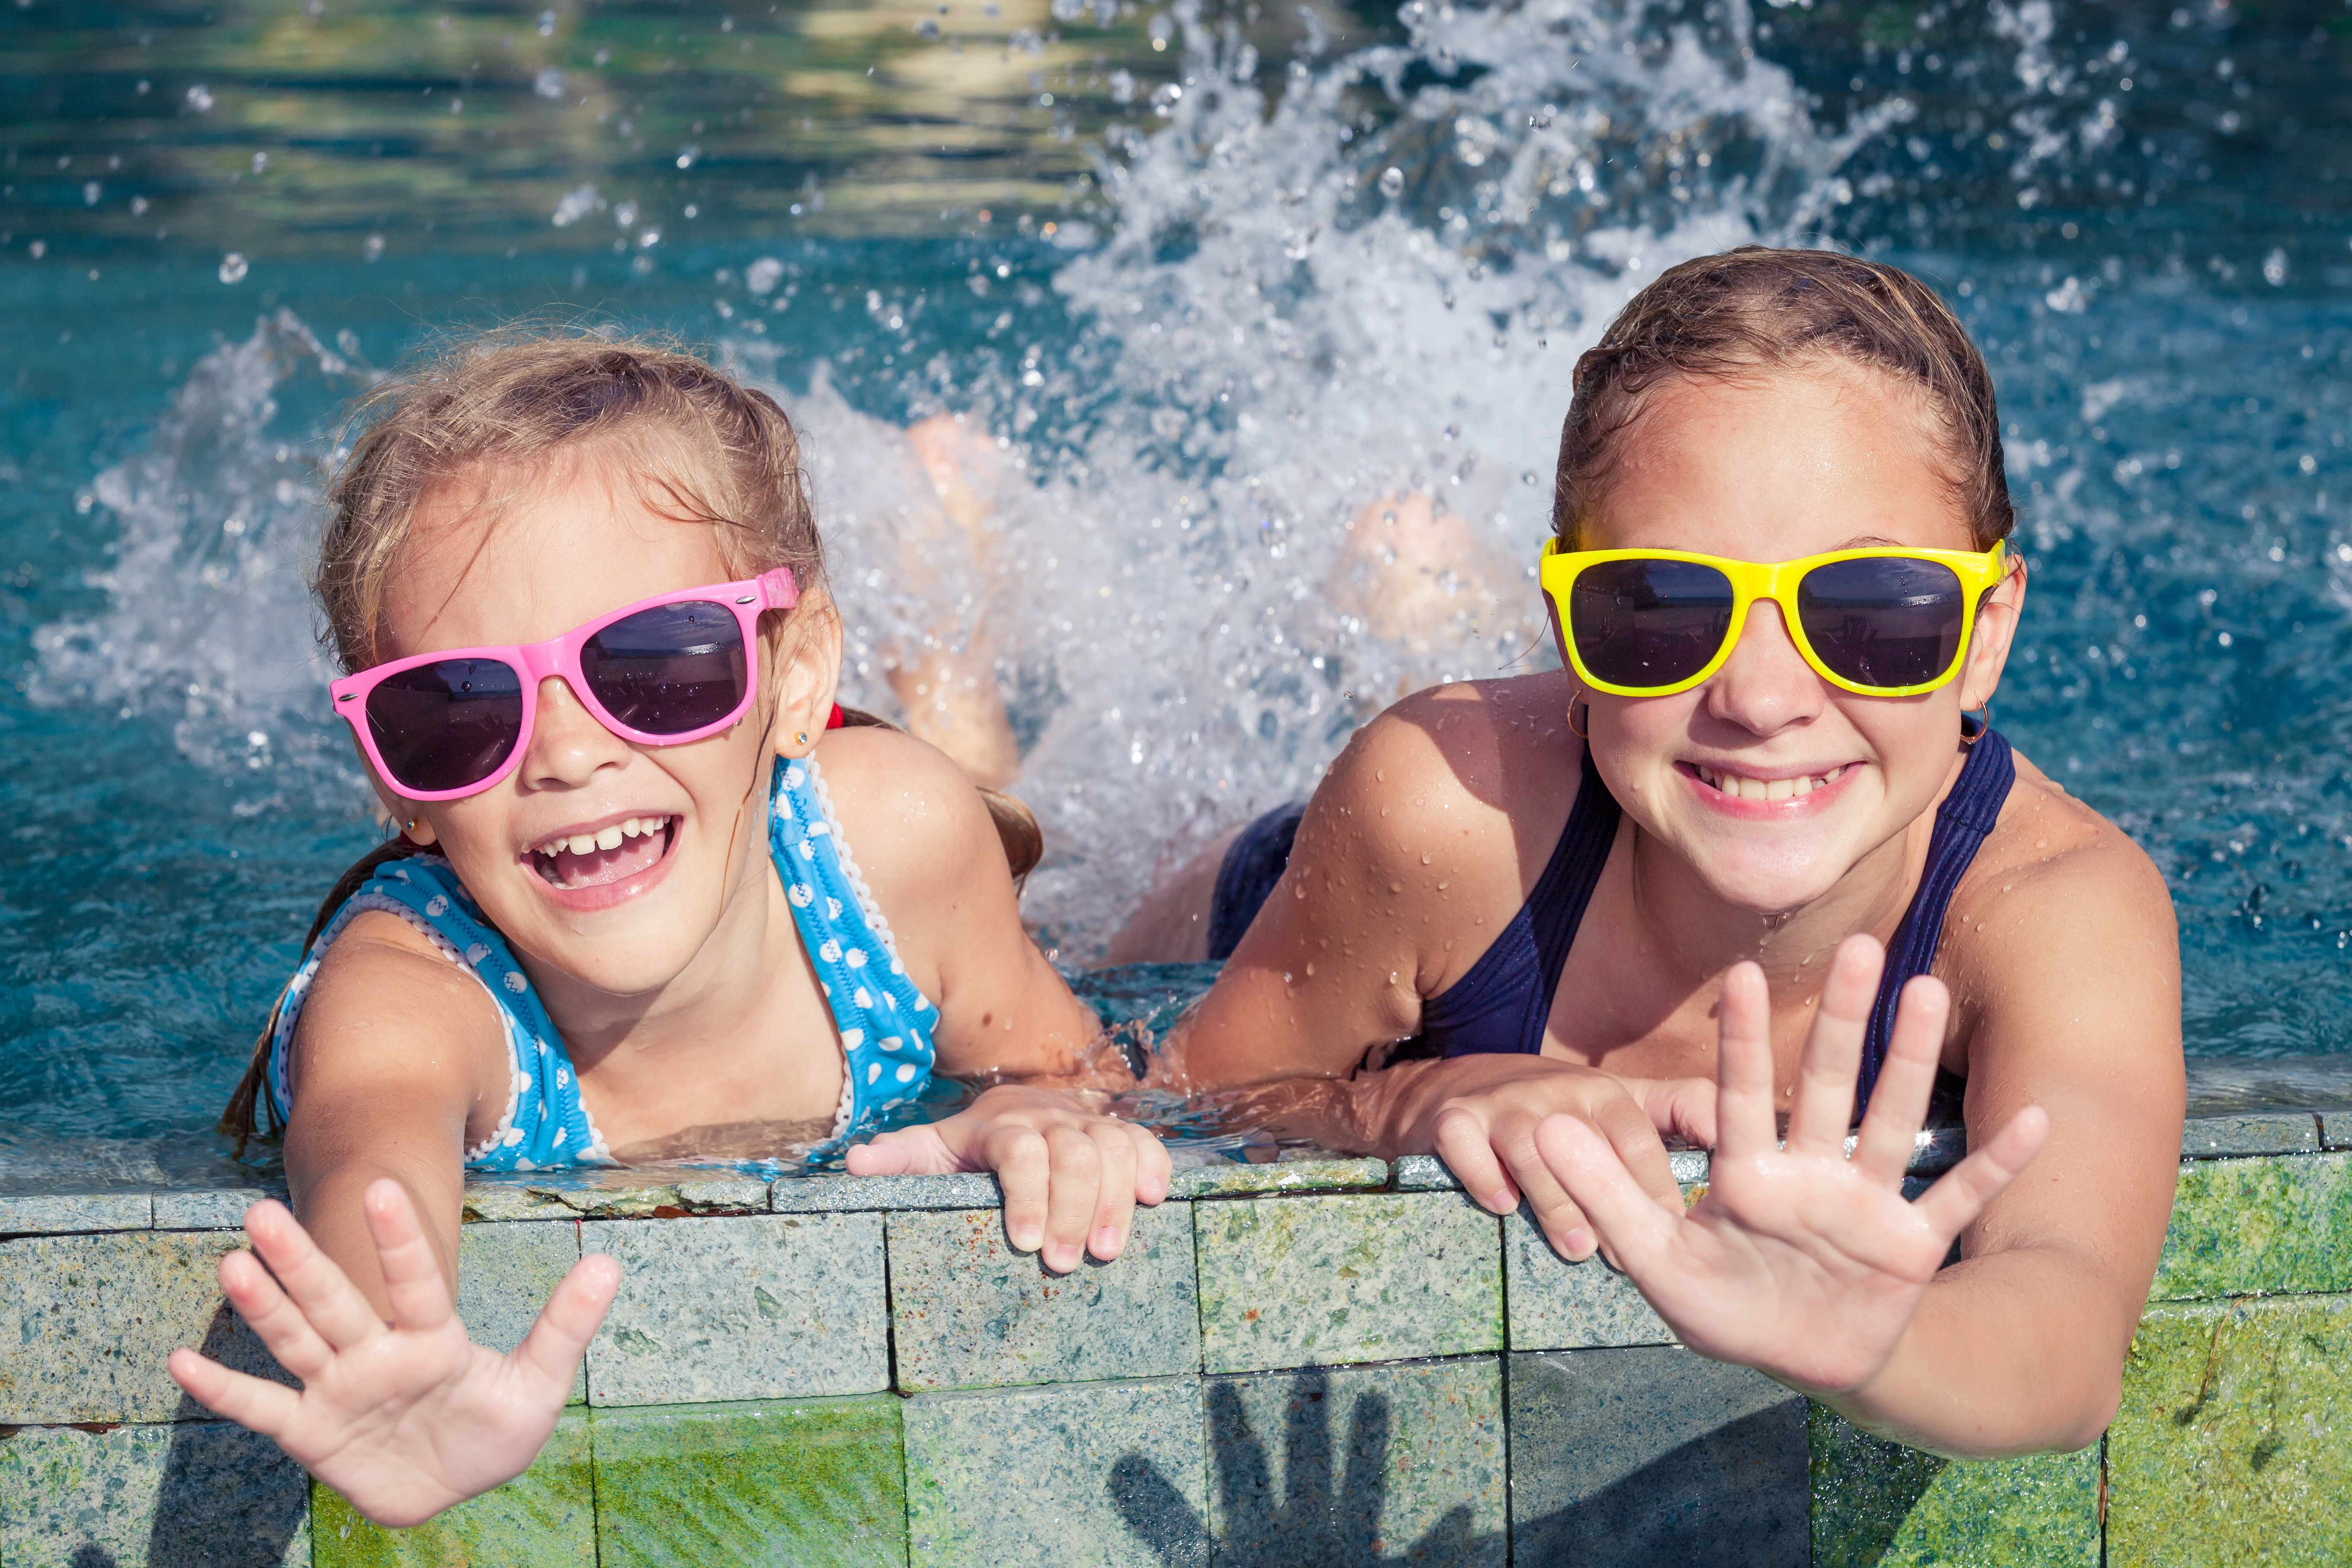 children splashing water in a swimming pool, wearing sun glasses